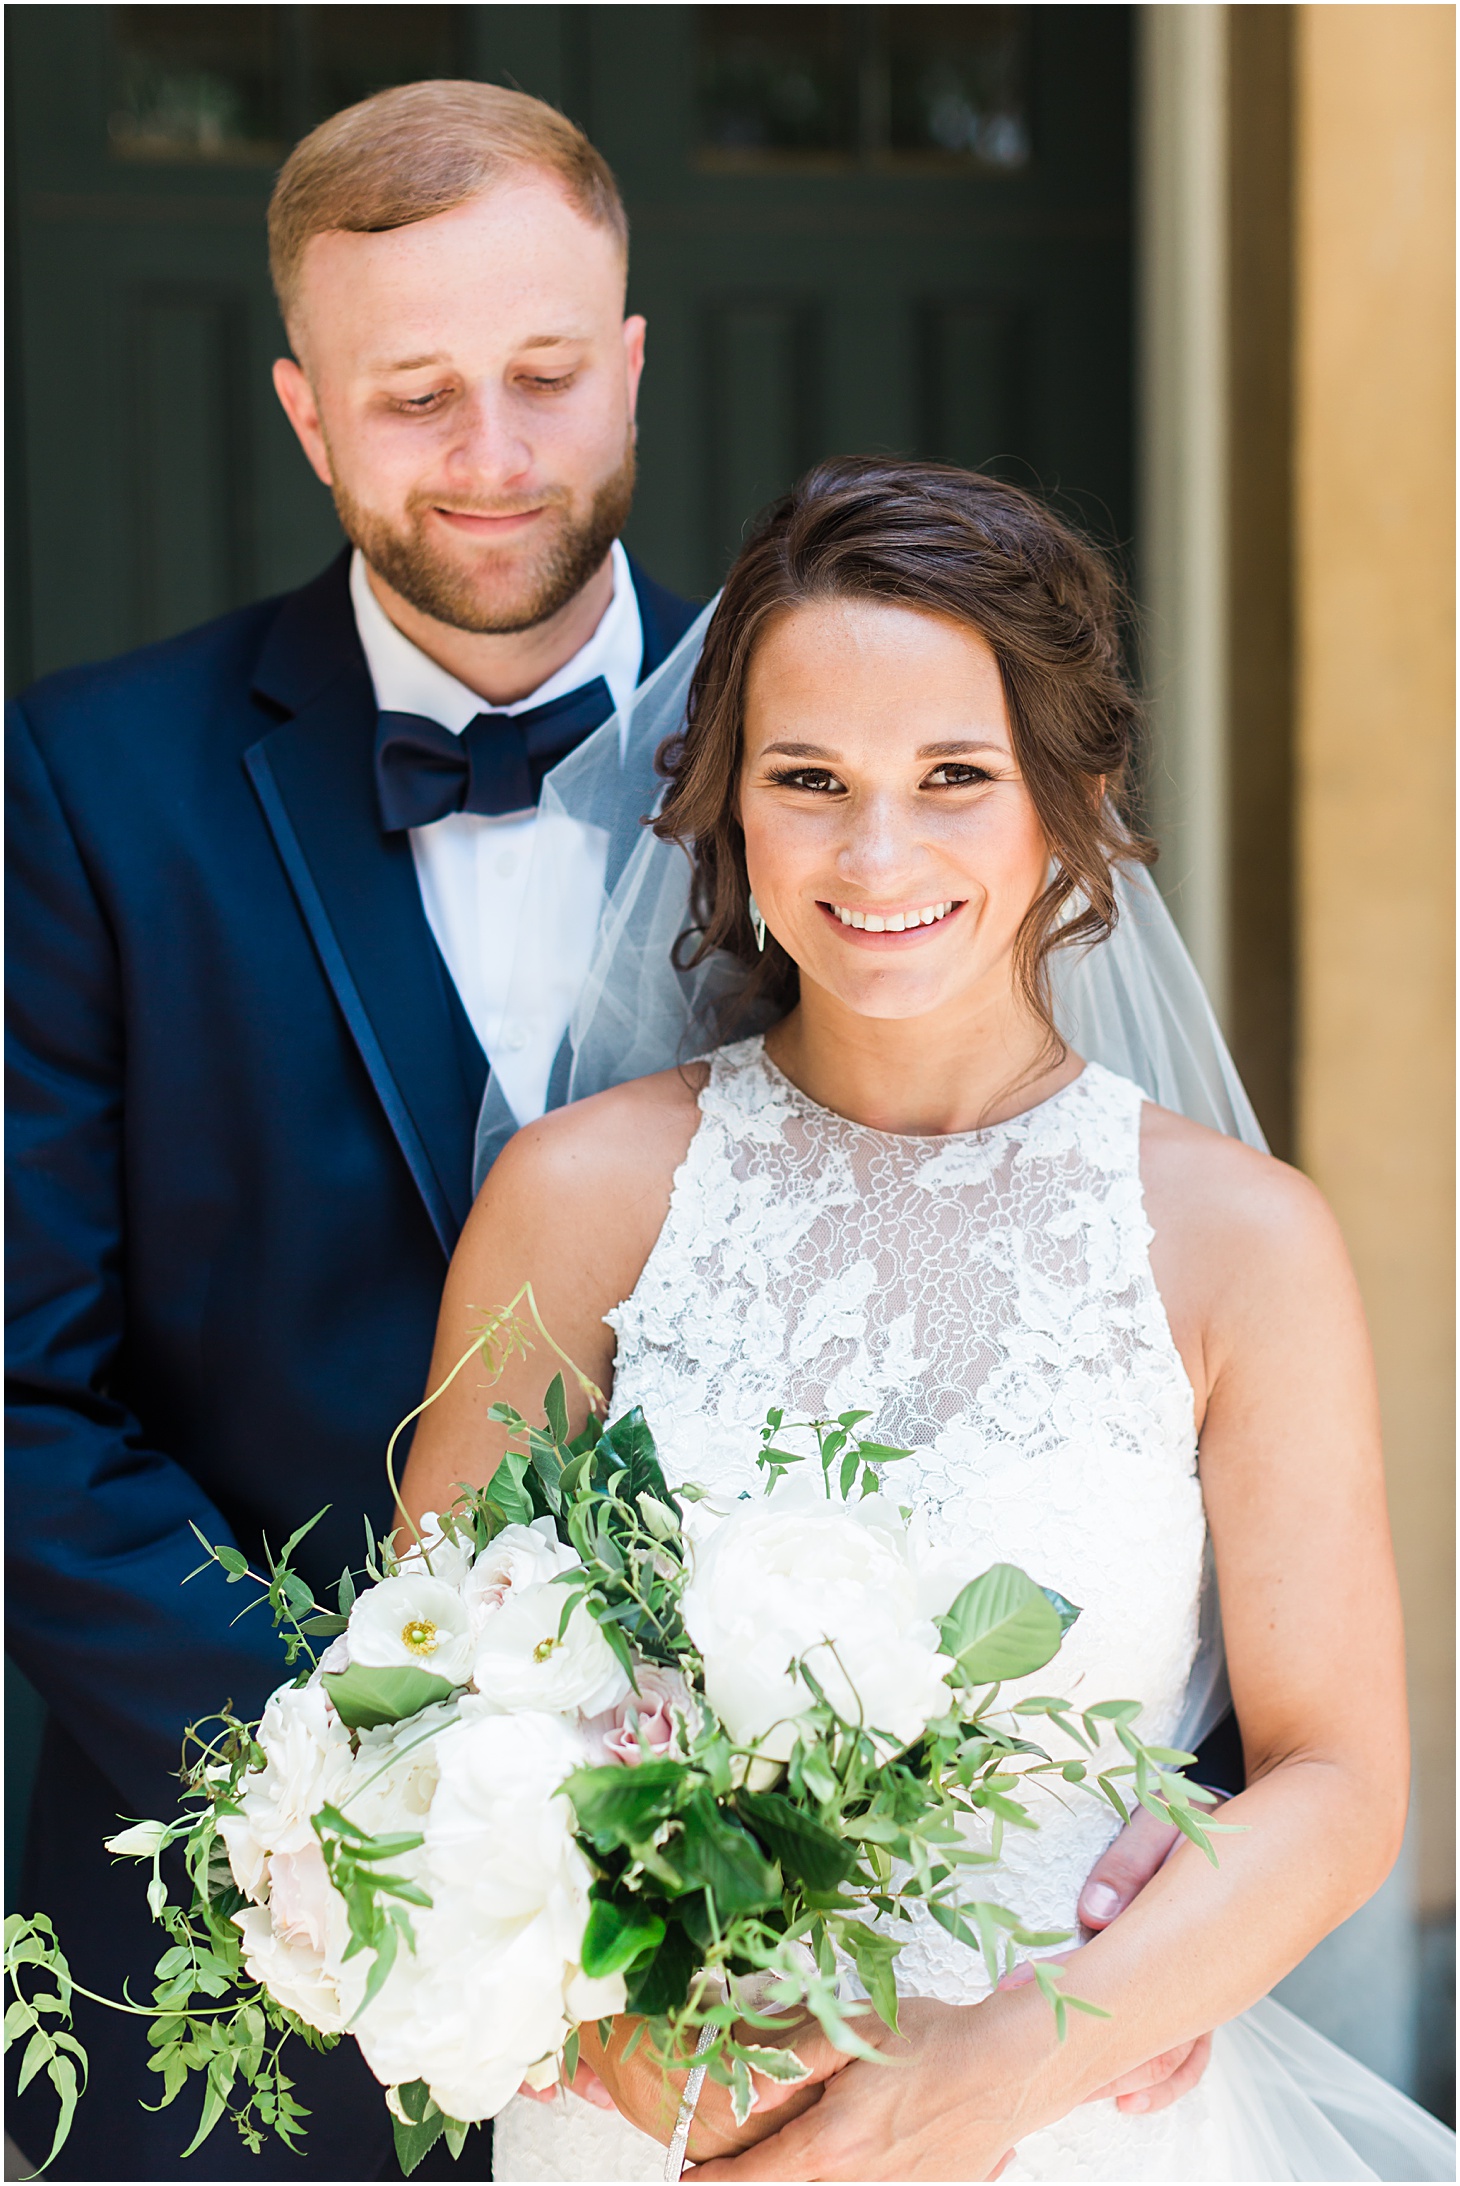 DESIGNING YOUR PERFECT DC WEDDING DAY TIMELINE | Washington Golf & Country Club wedding by Sarah Bradshaw